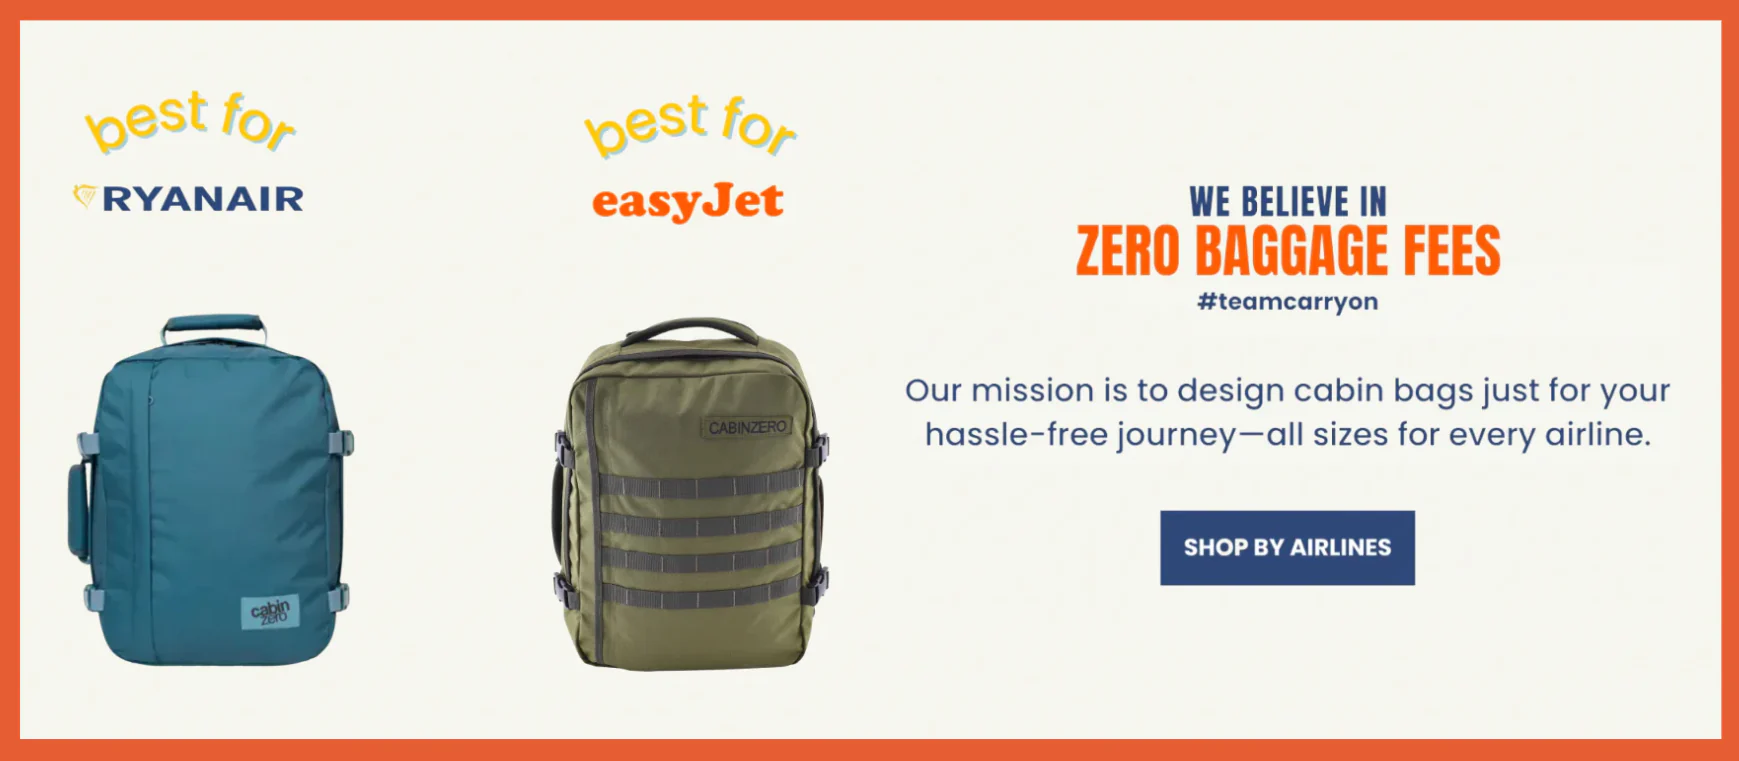 easyjet cabin bag size - Cabinzero